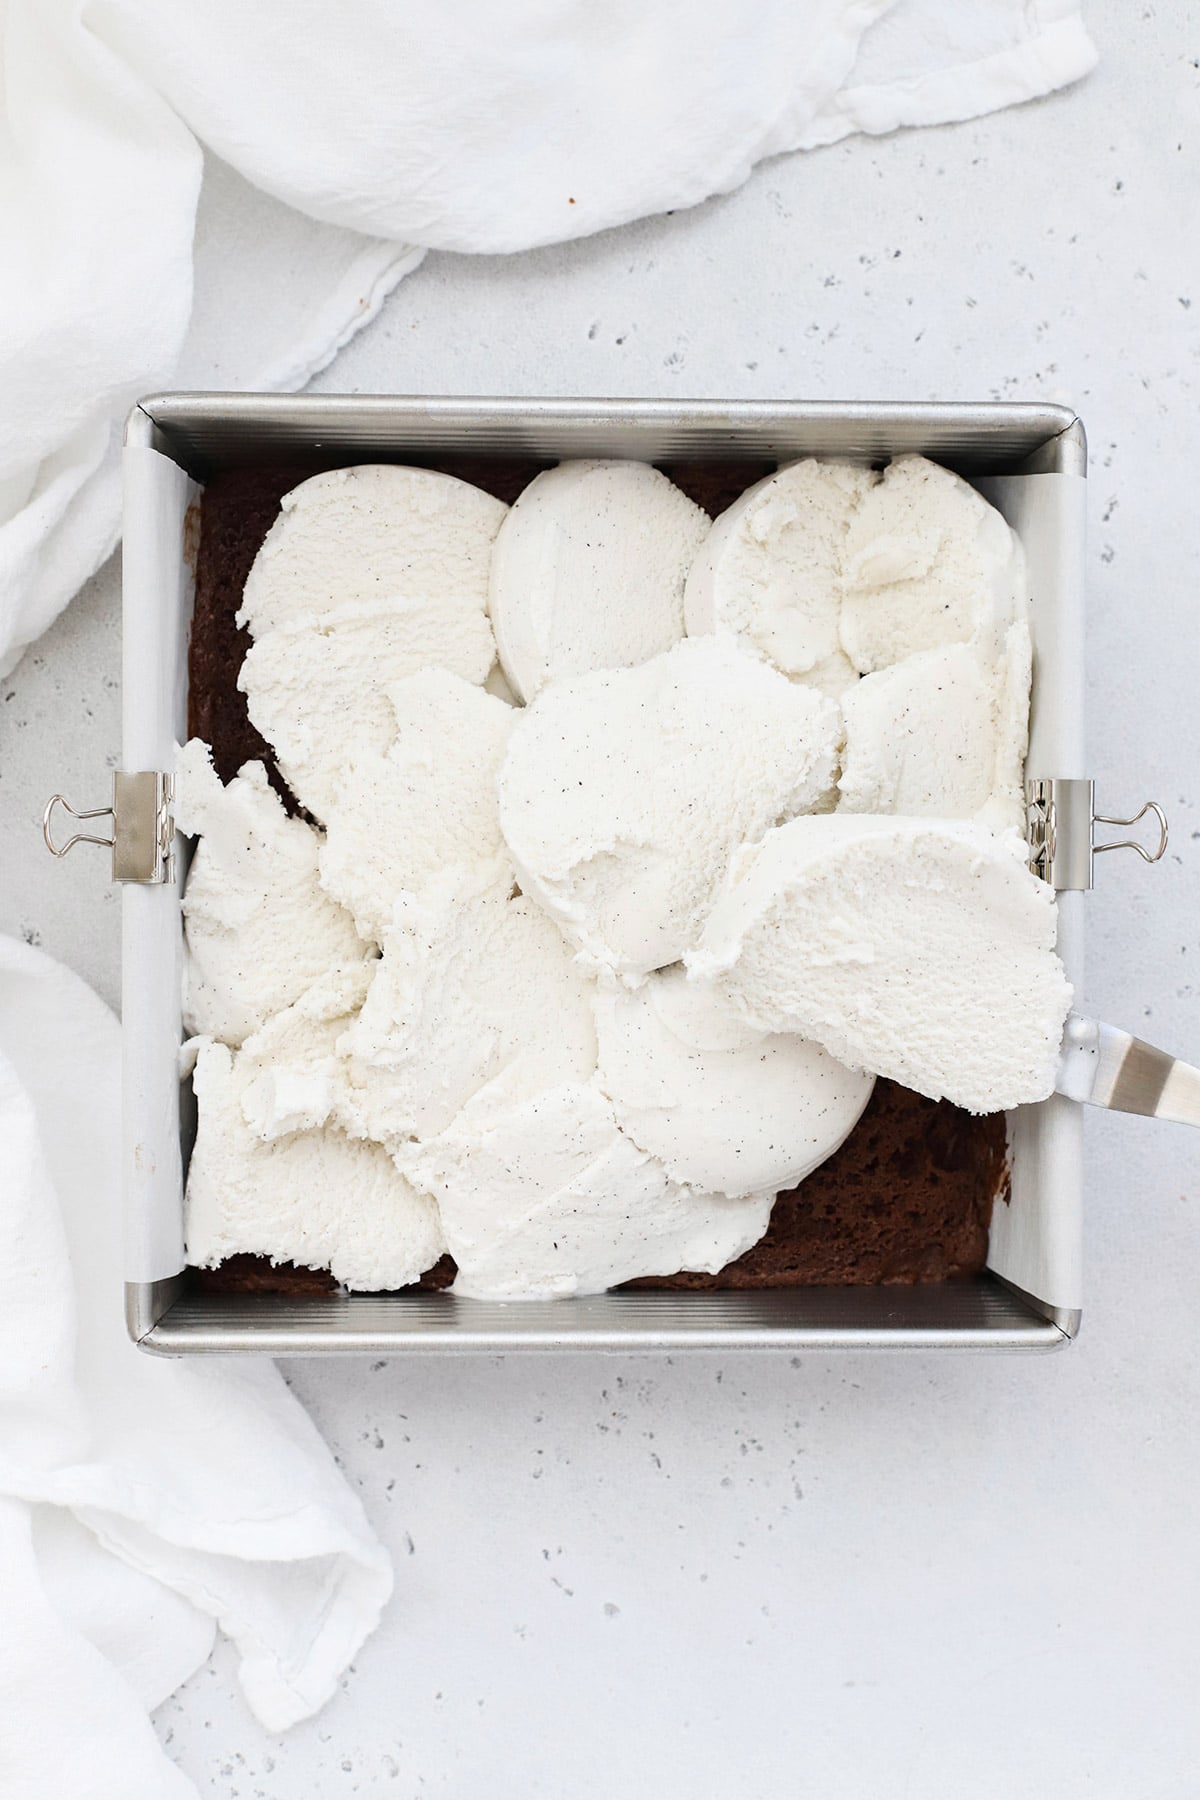 Scooping ice cream onto gluten-free brownies to make gluten-free brownie ice cream sandwiches